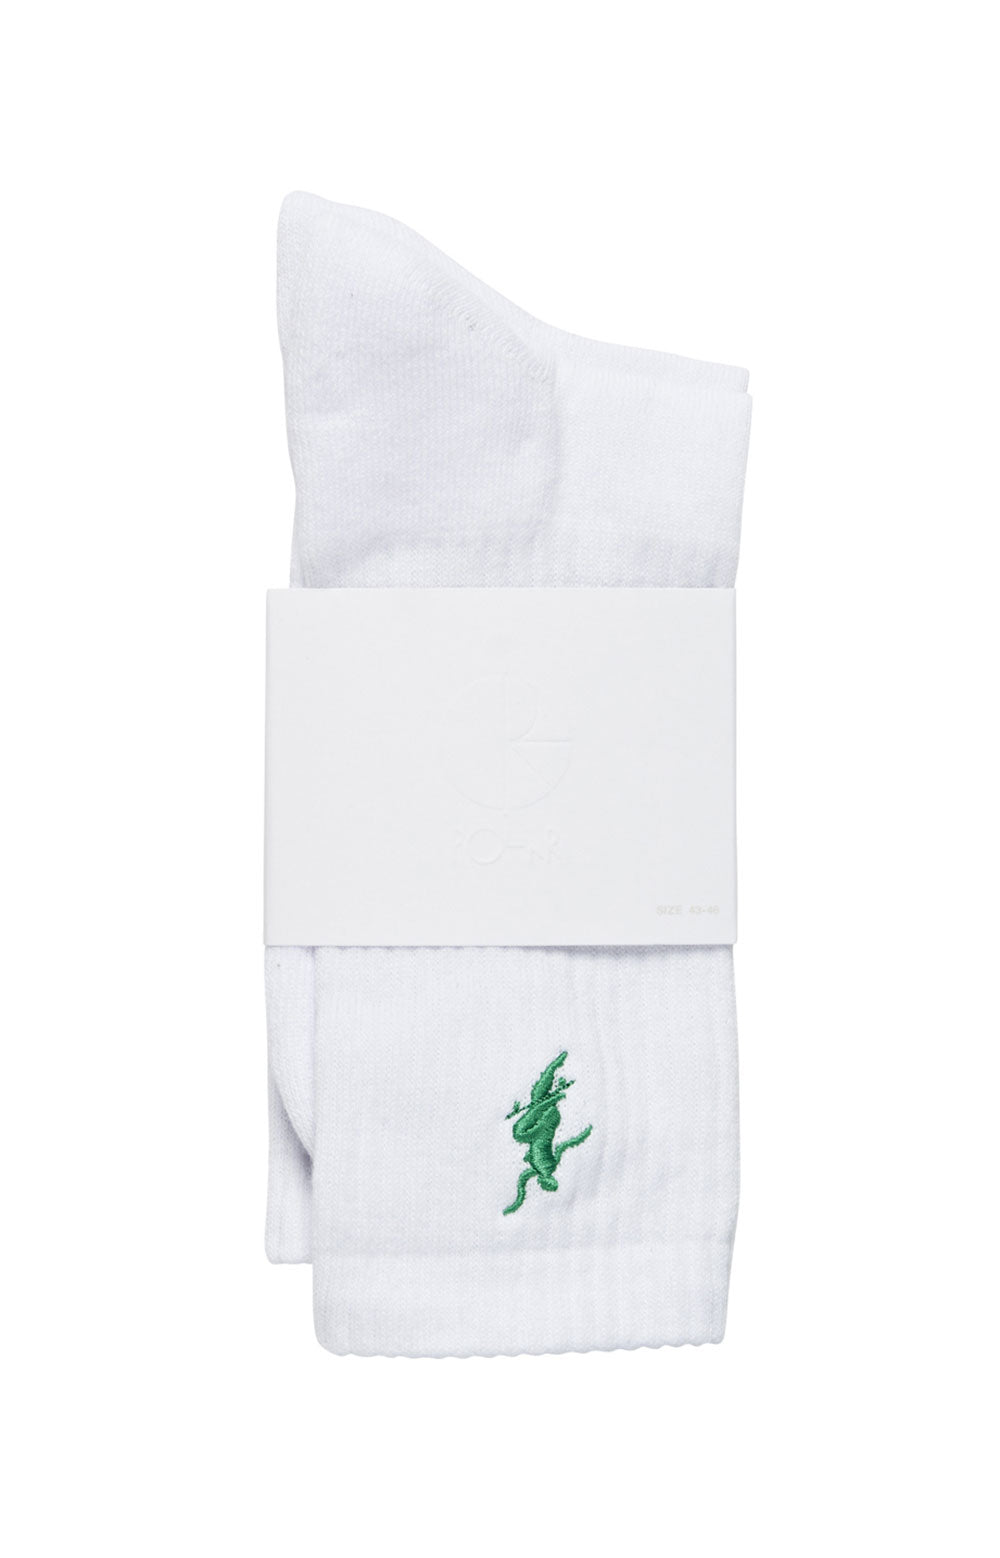 No Comply Socks - White/Green